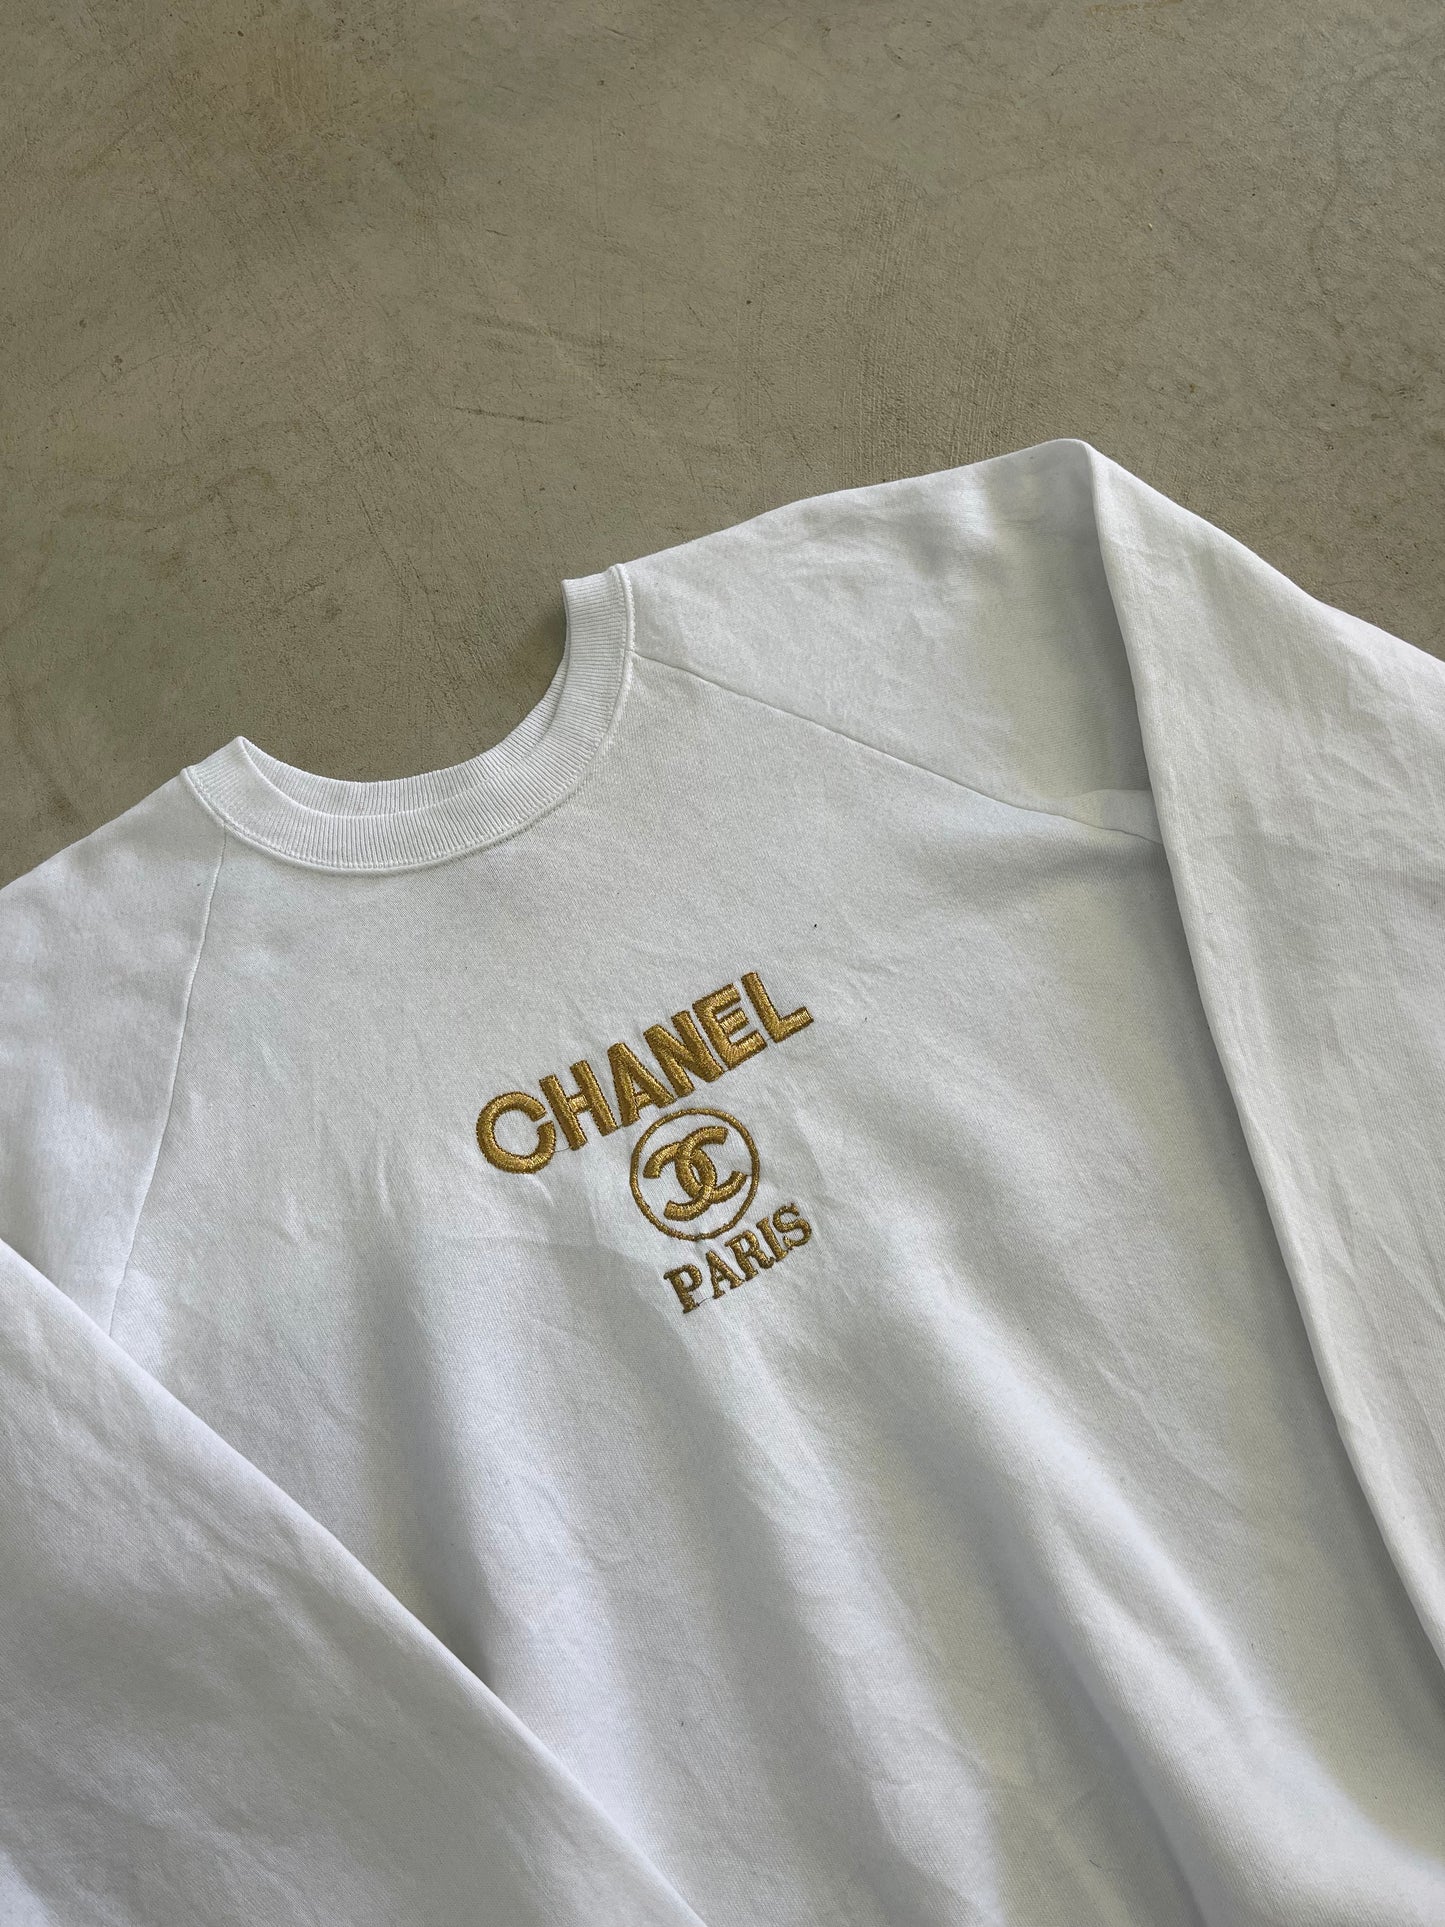 Vintage Bootleg Chanel Sweater (XL)